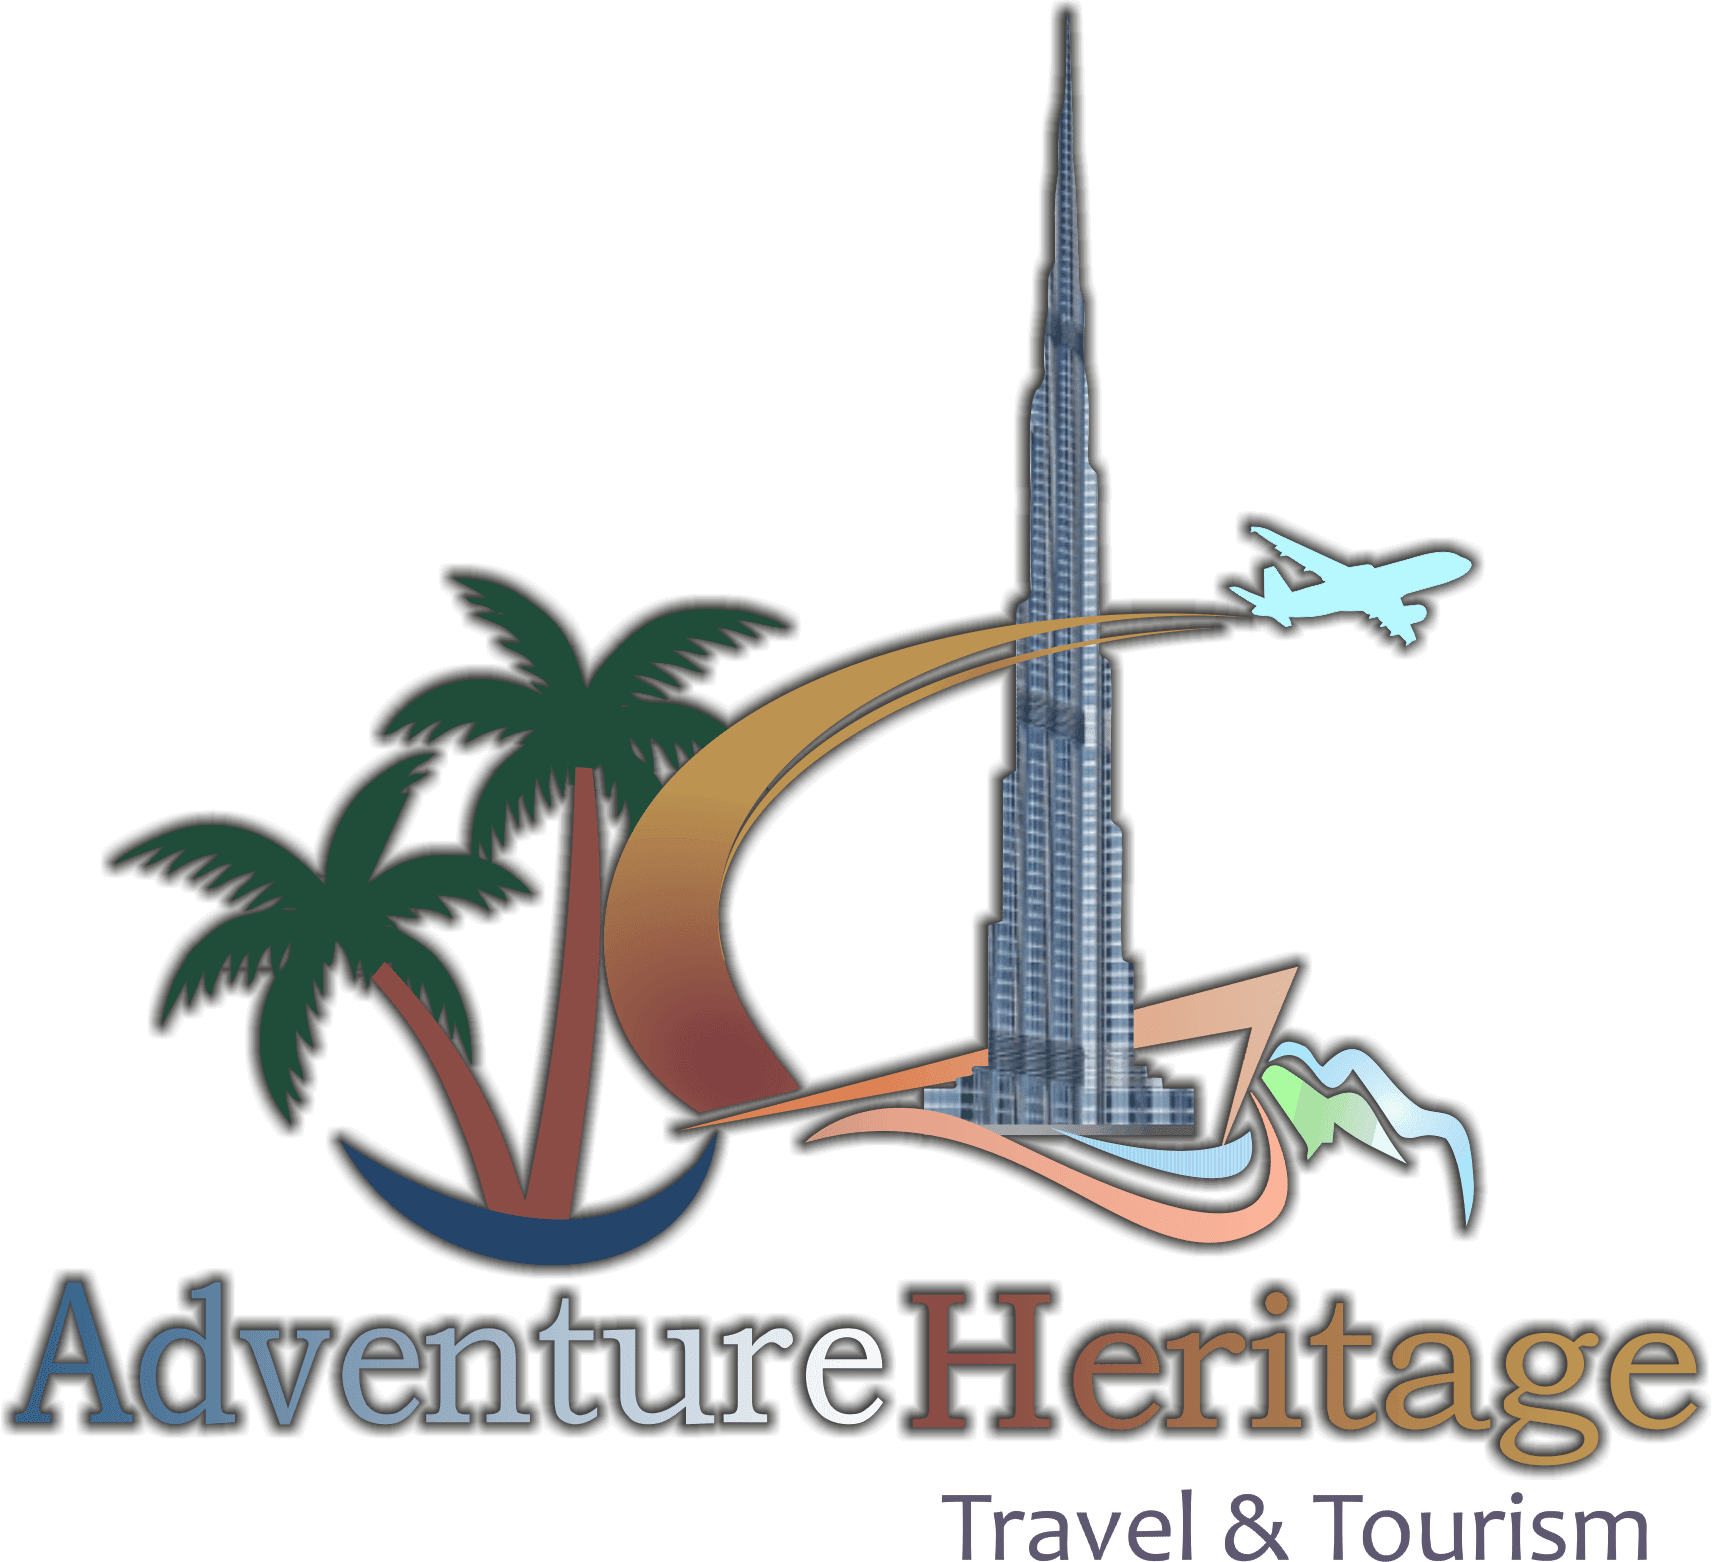 Hatta Tour Dubai